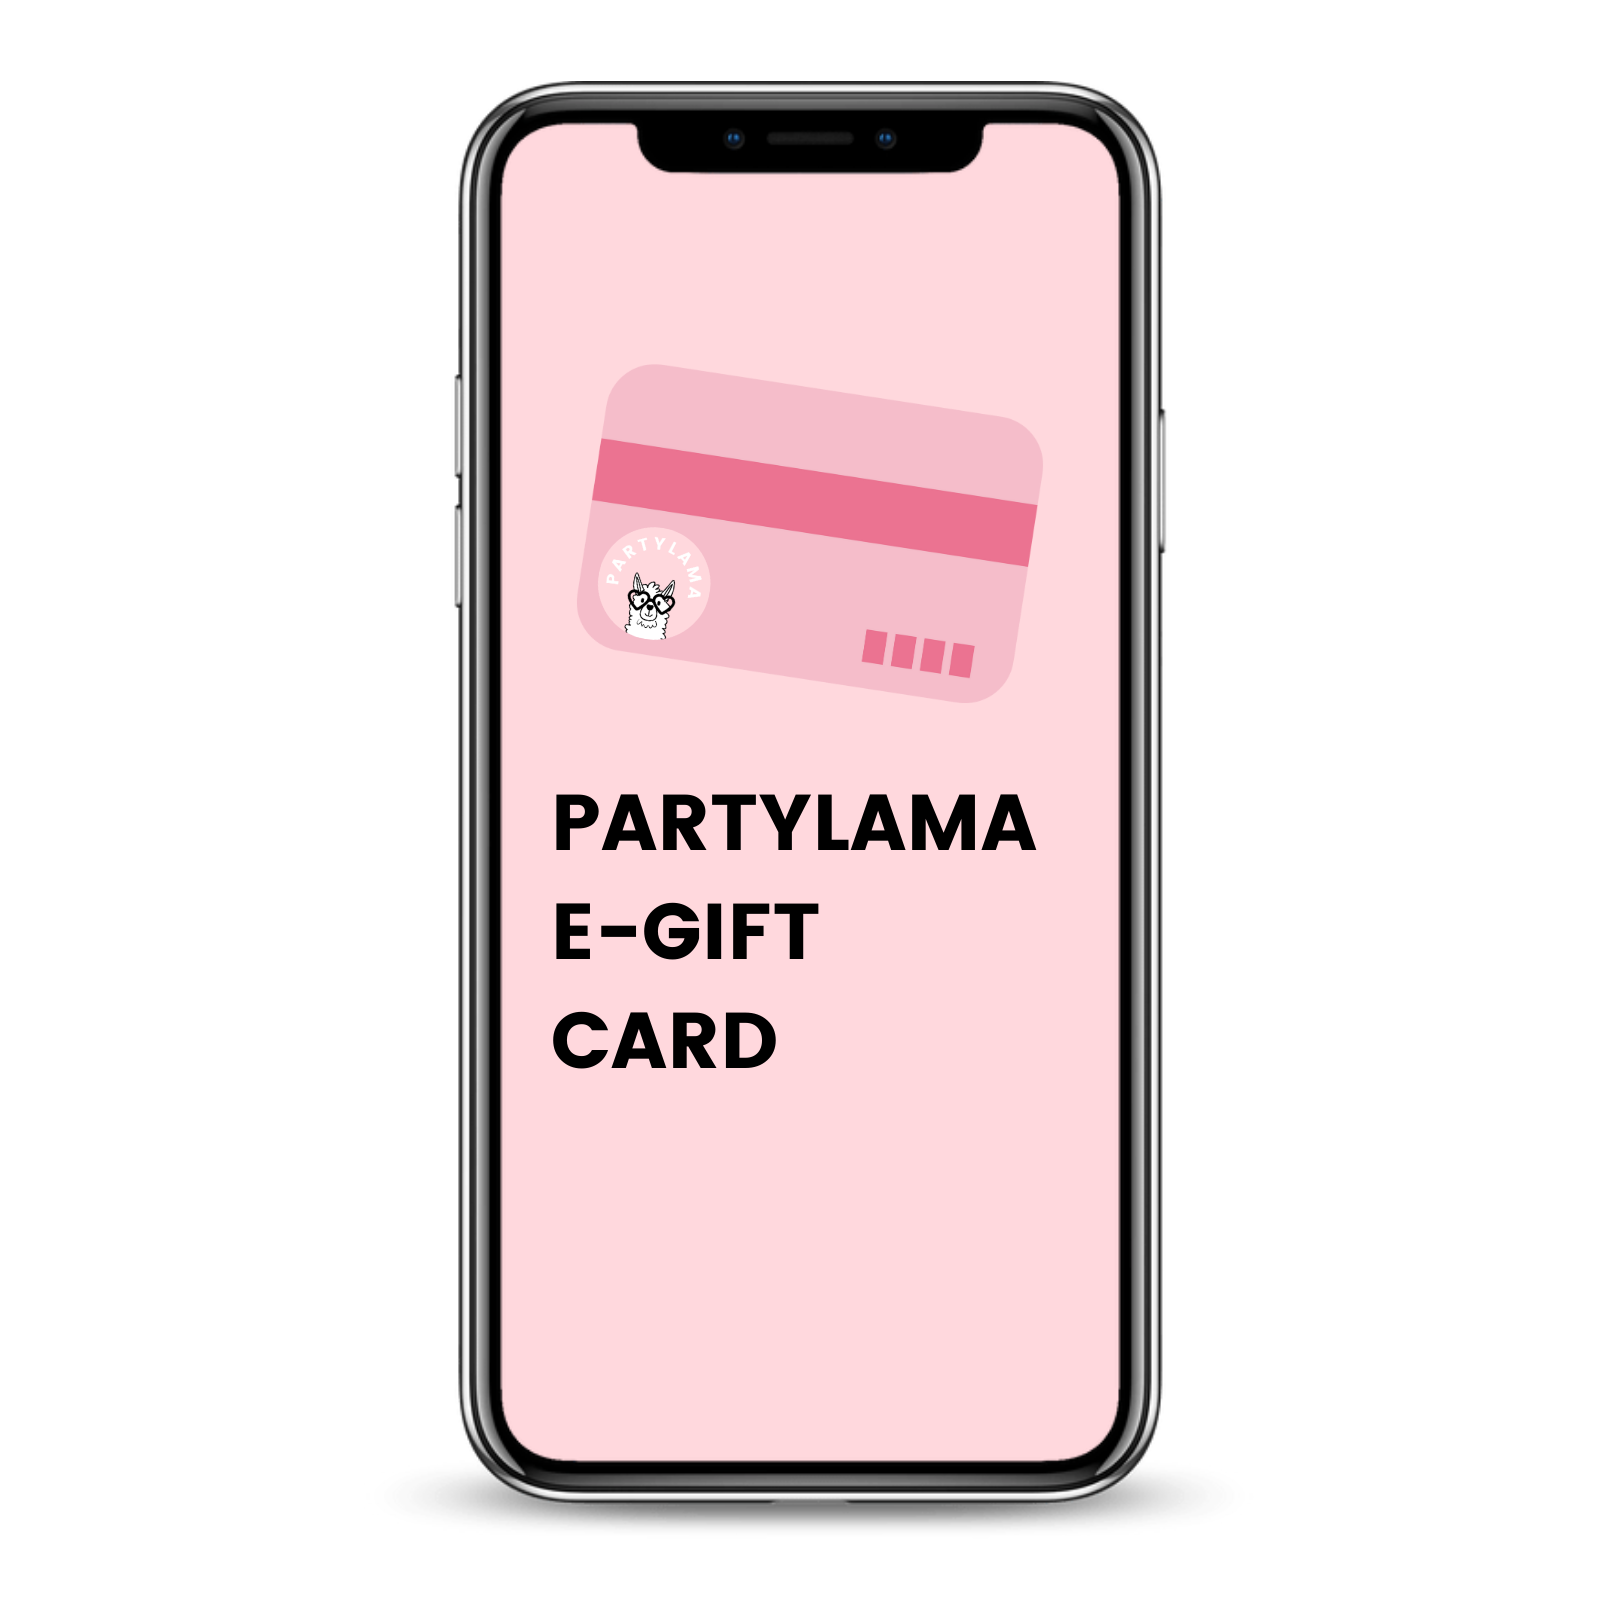 Partylama e-gift card